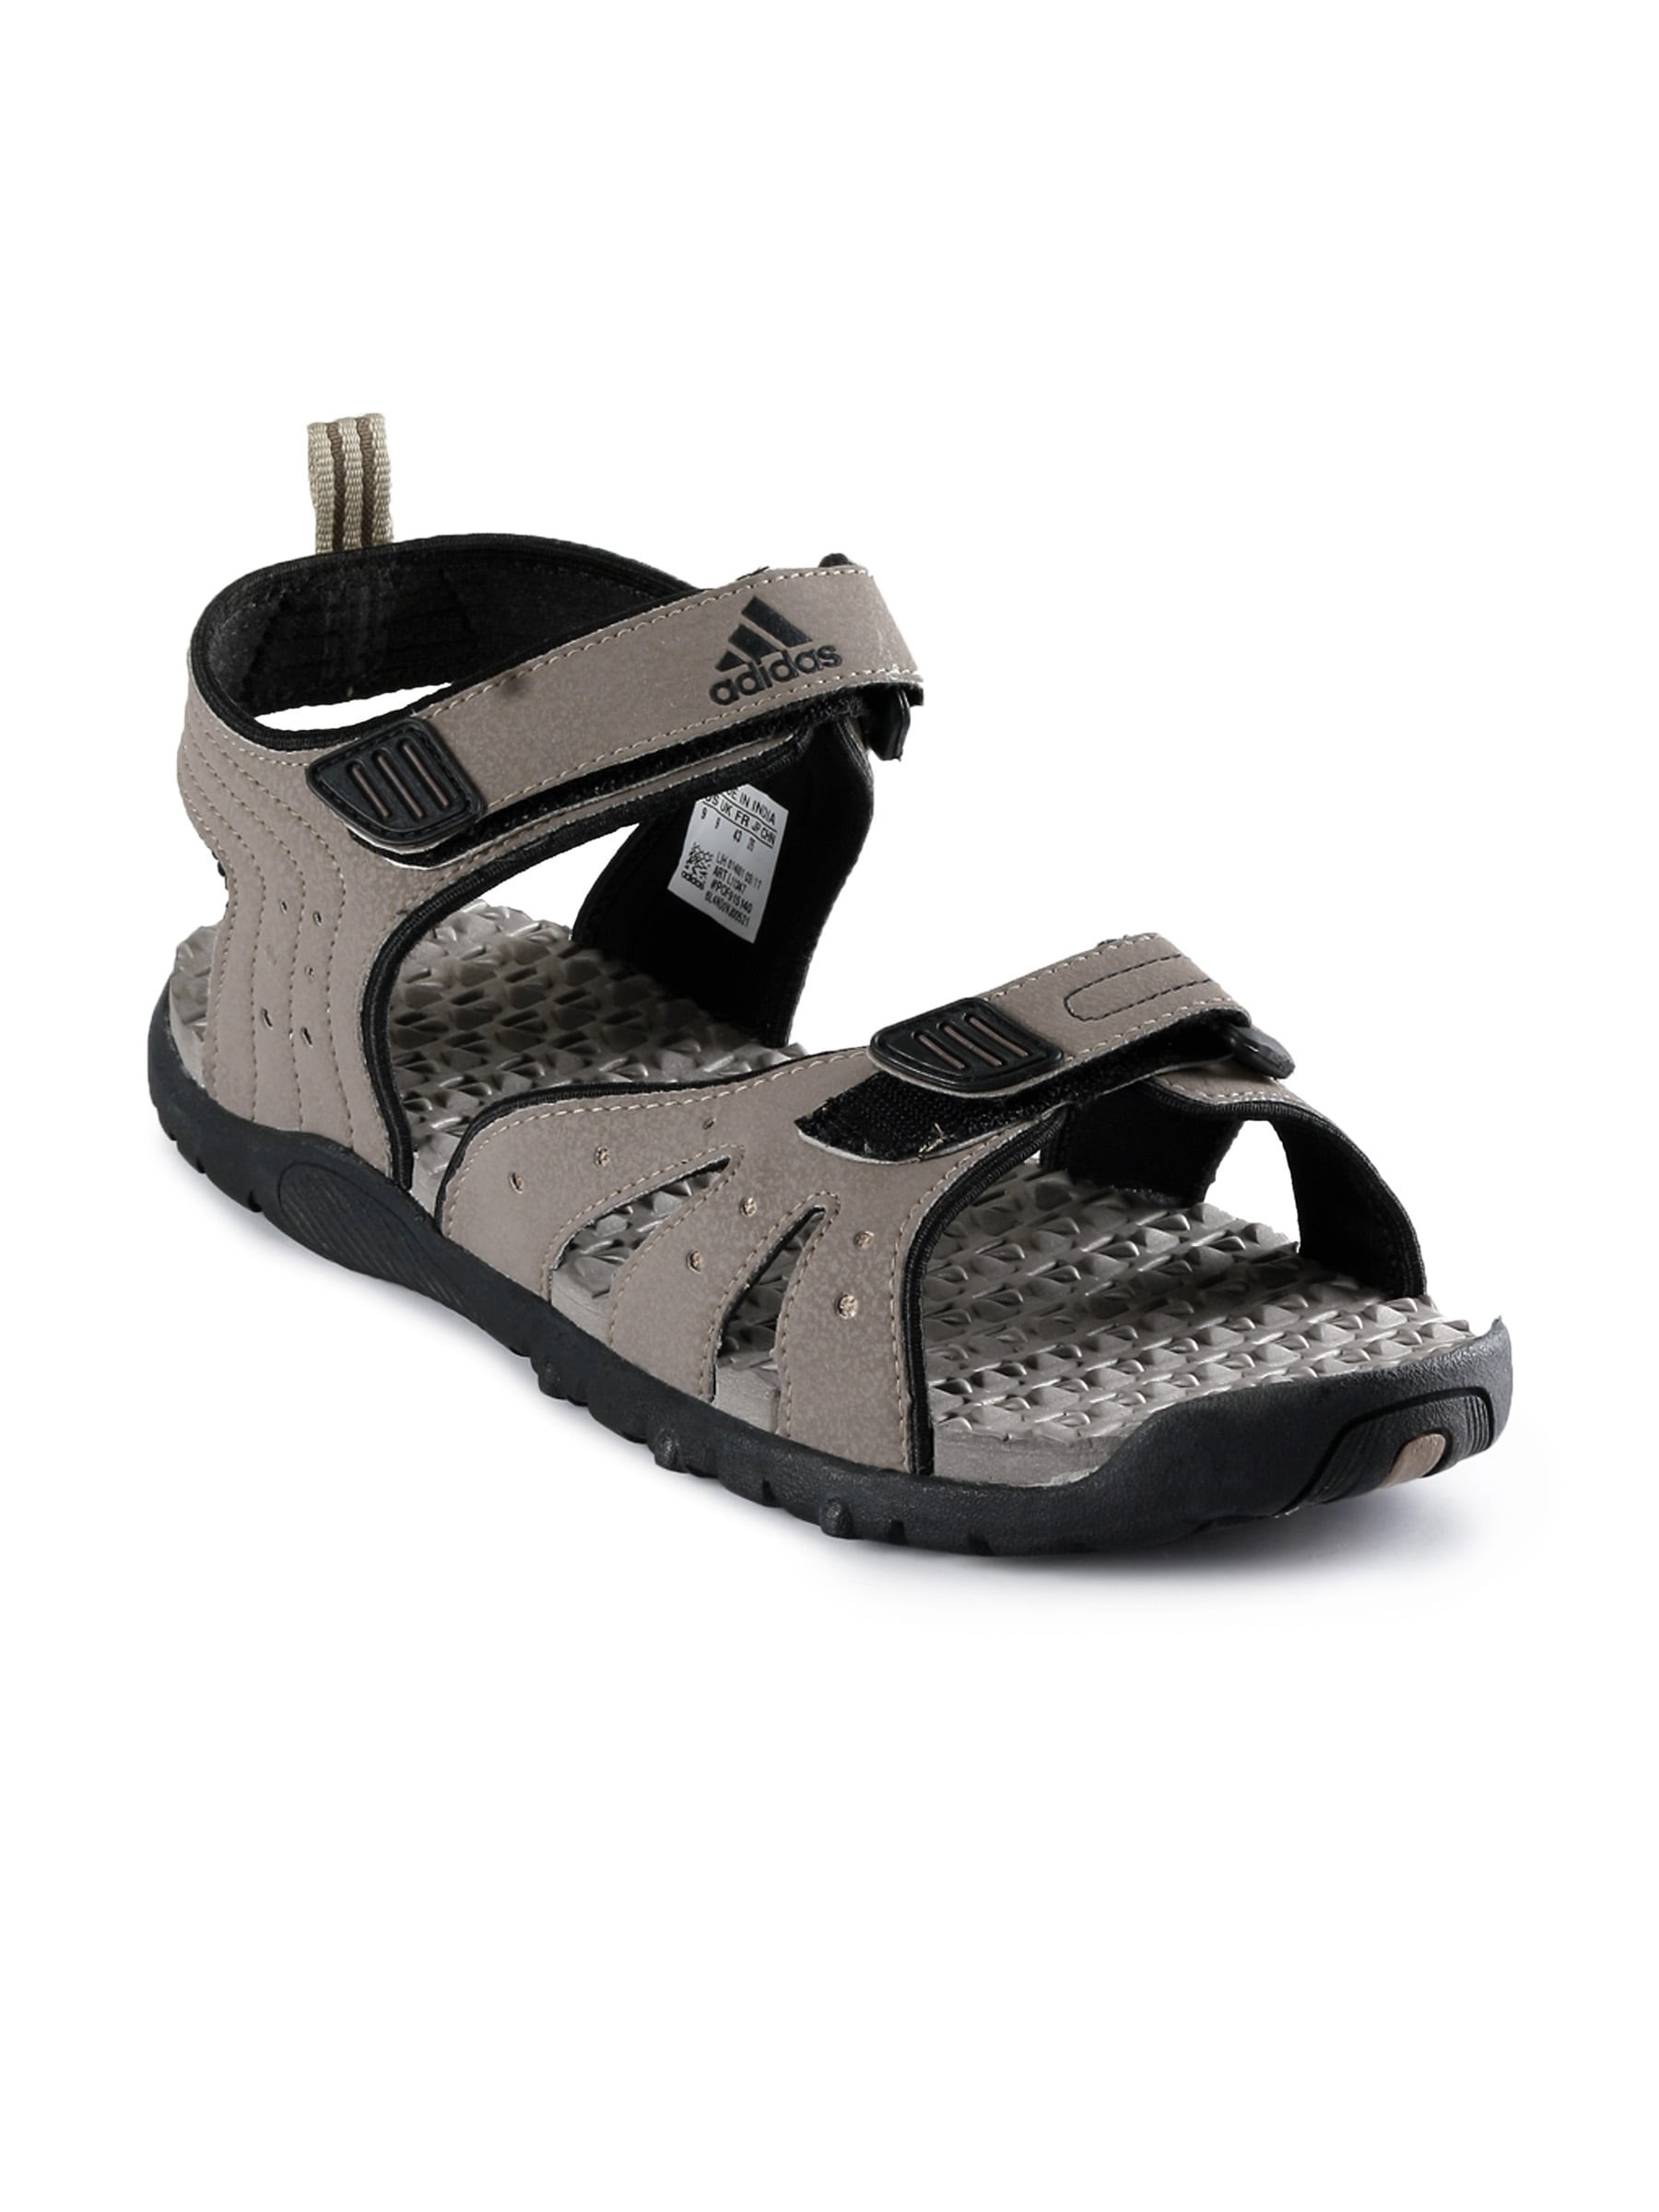 ADIDAS Men Receptor Grey Sandals